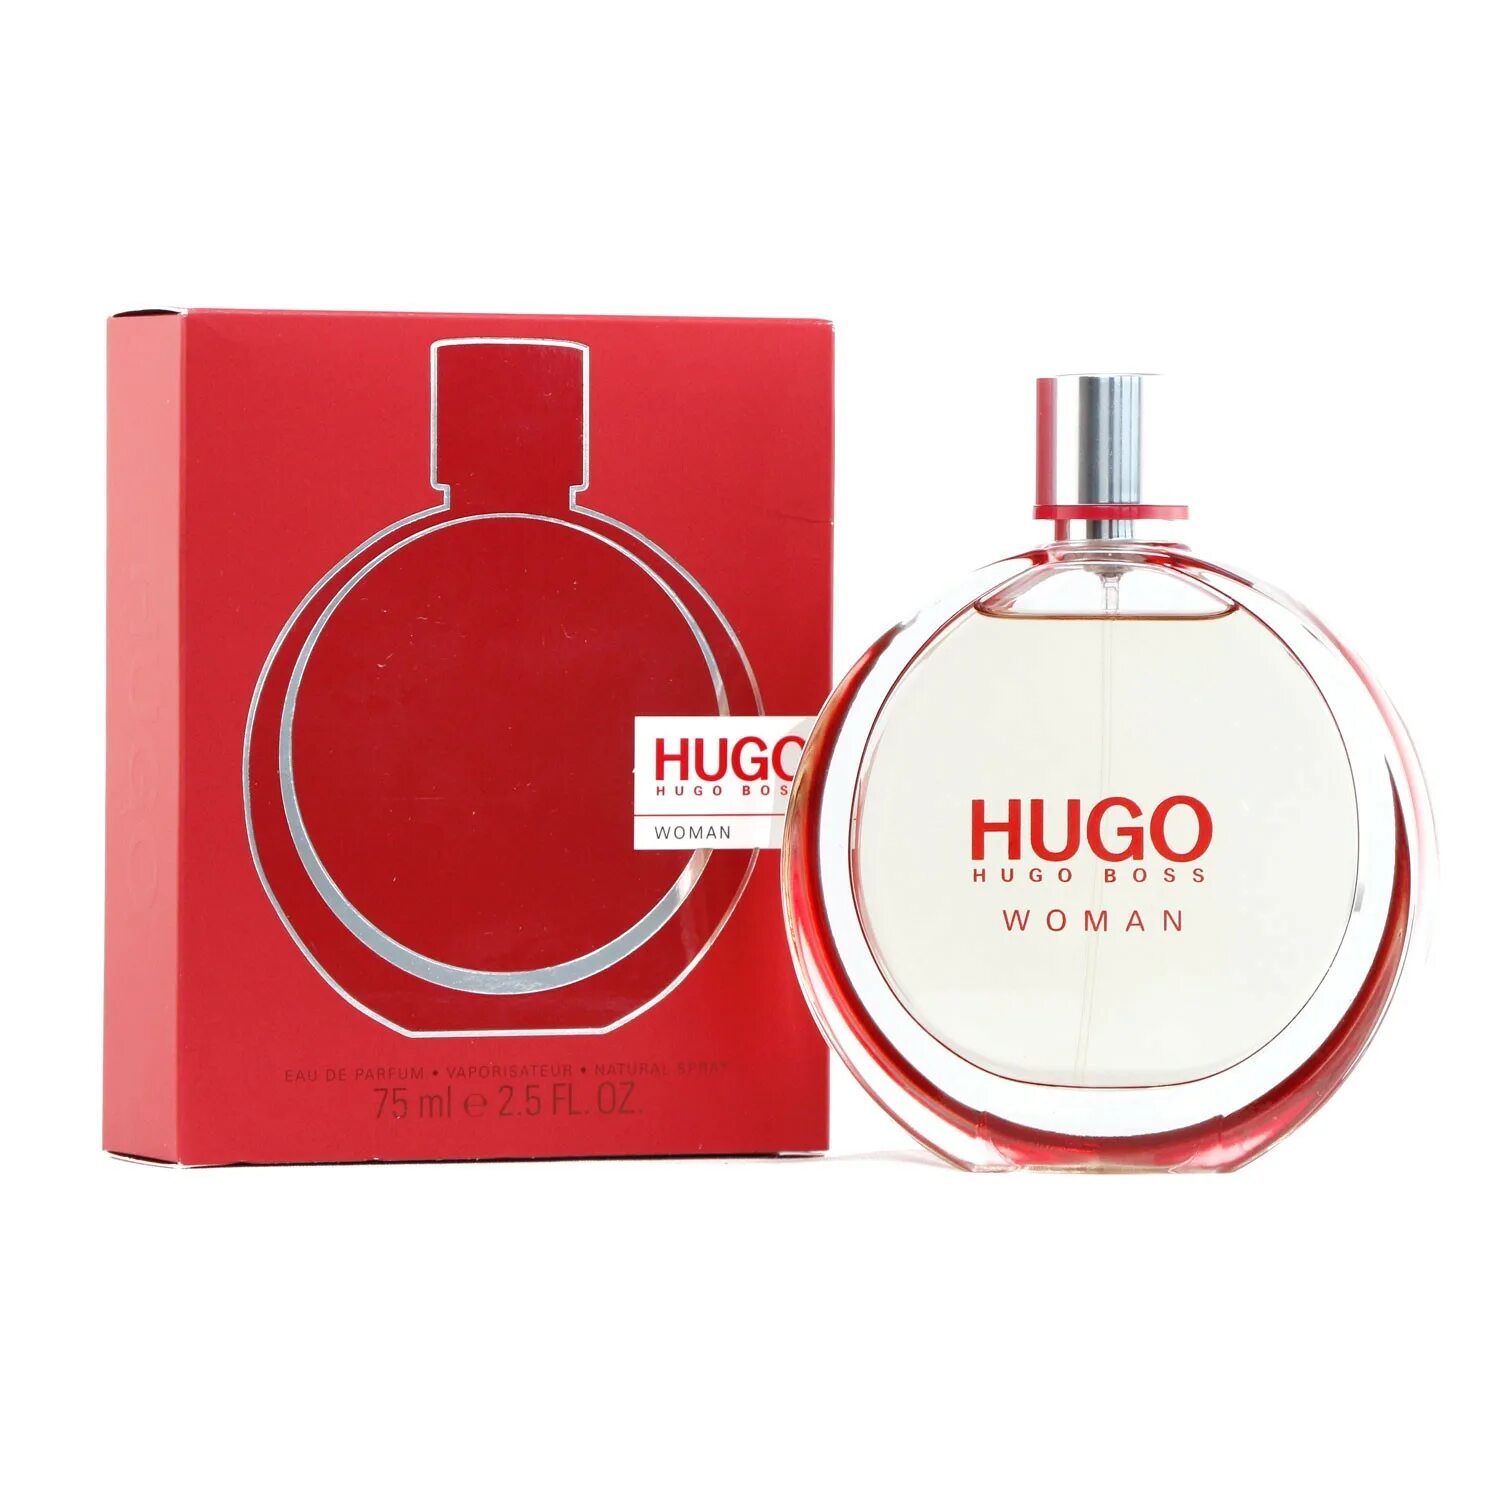 Boss Hugo woman 50ml EDP красный. Hugo Boss Hugo woman Eau de Parfum. Рени Хьюго босс женские. Hugo Boss woman Reni.